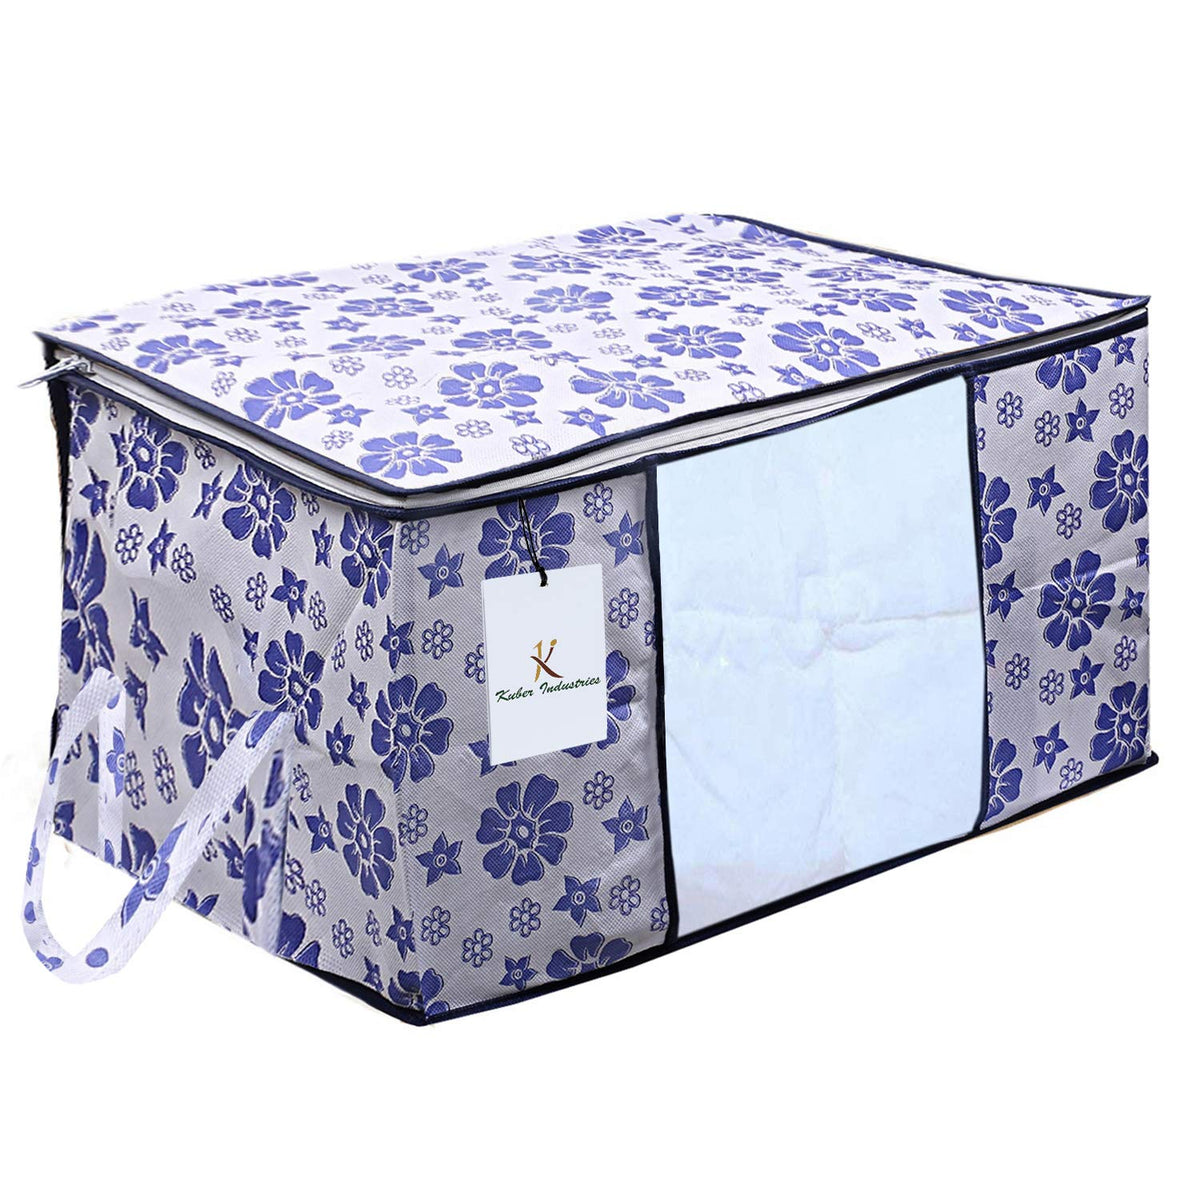 Kuber Industries Underbed Storage Bag,Storage Organiser,Blanket Cover Set of 1 Pc - Royal Blue, Extra Large Size,CTKNEW236